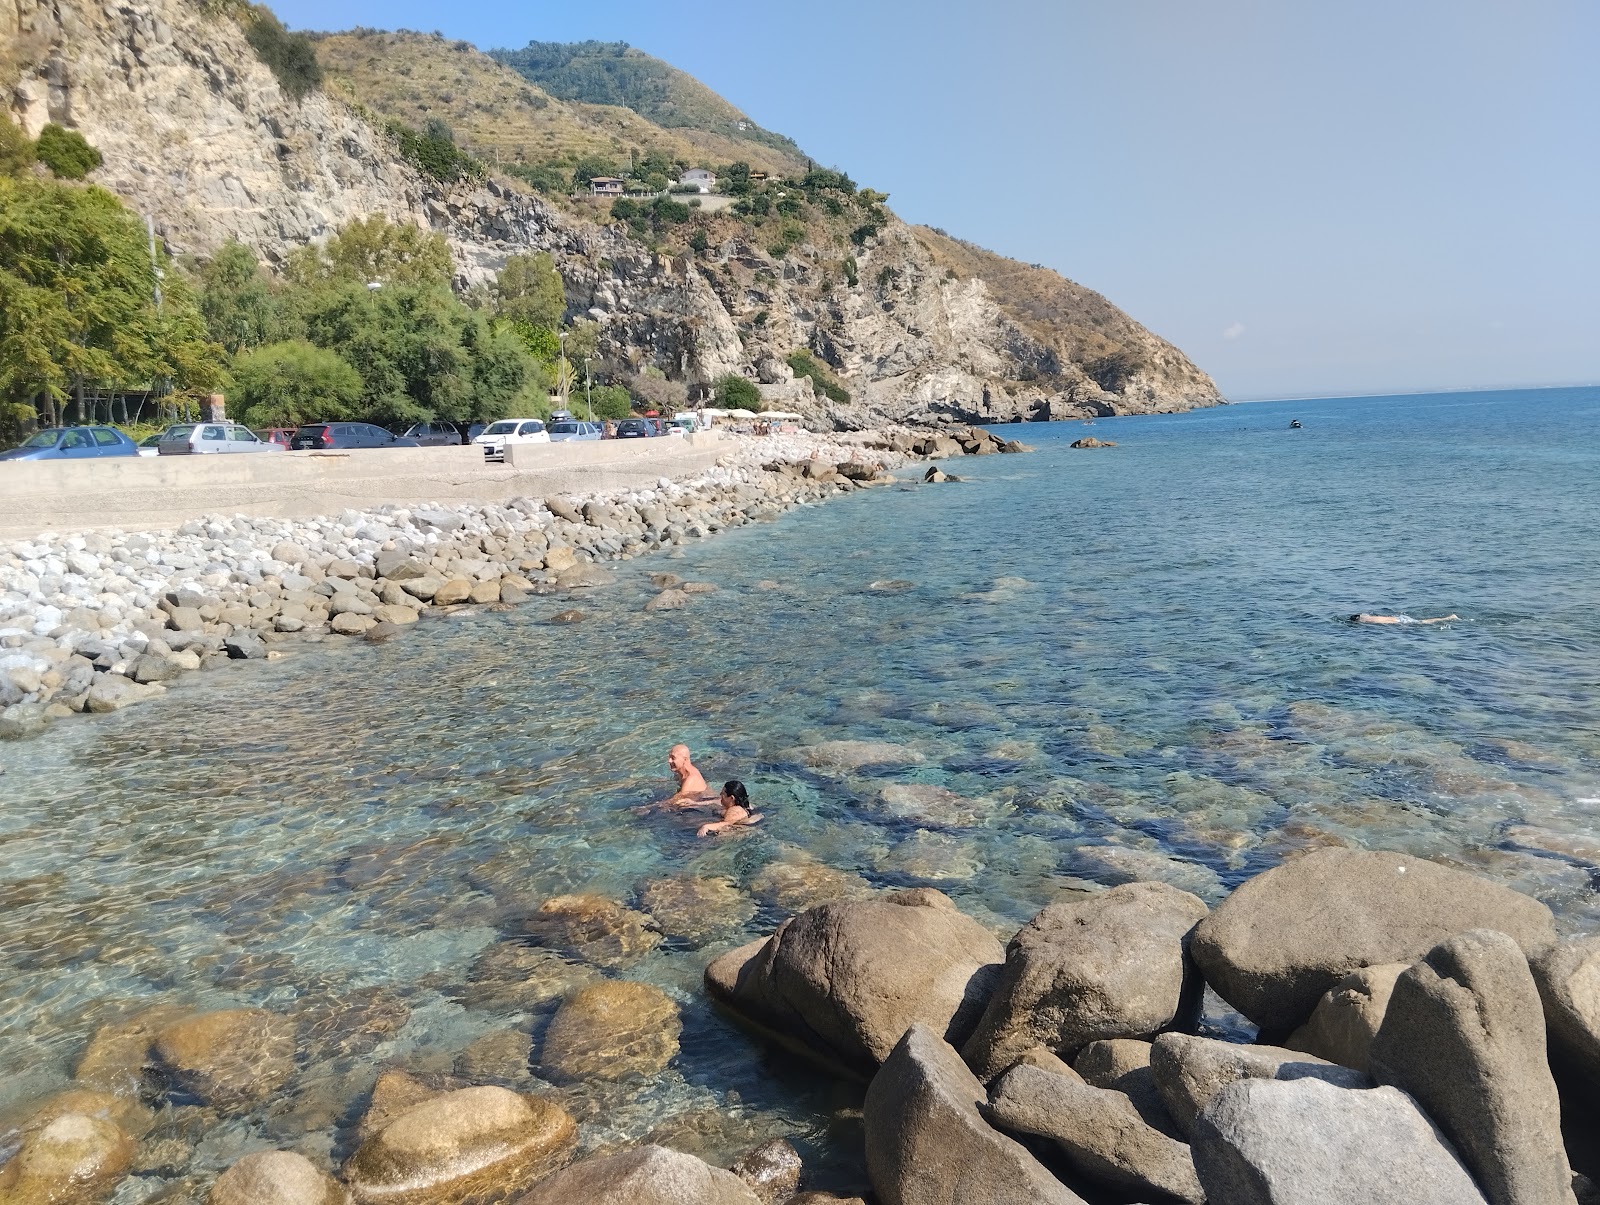 Spiaggia di Coccorino'in fotoğrafı doğrudan plaj ile birlikte